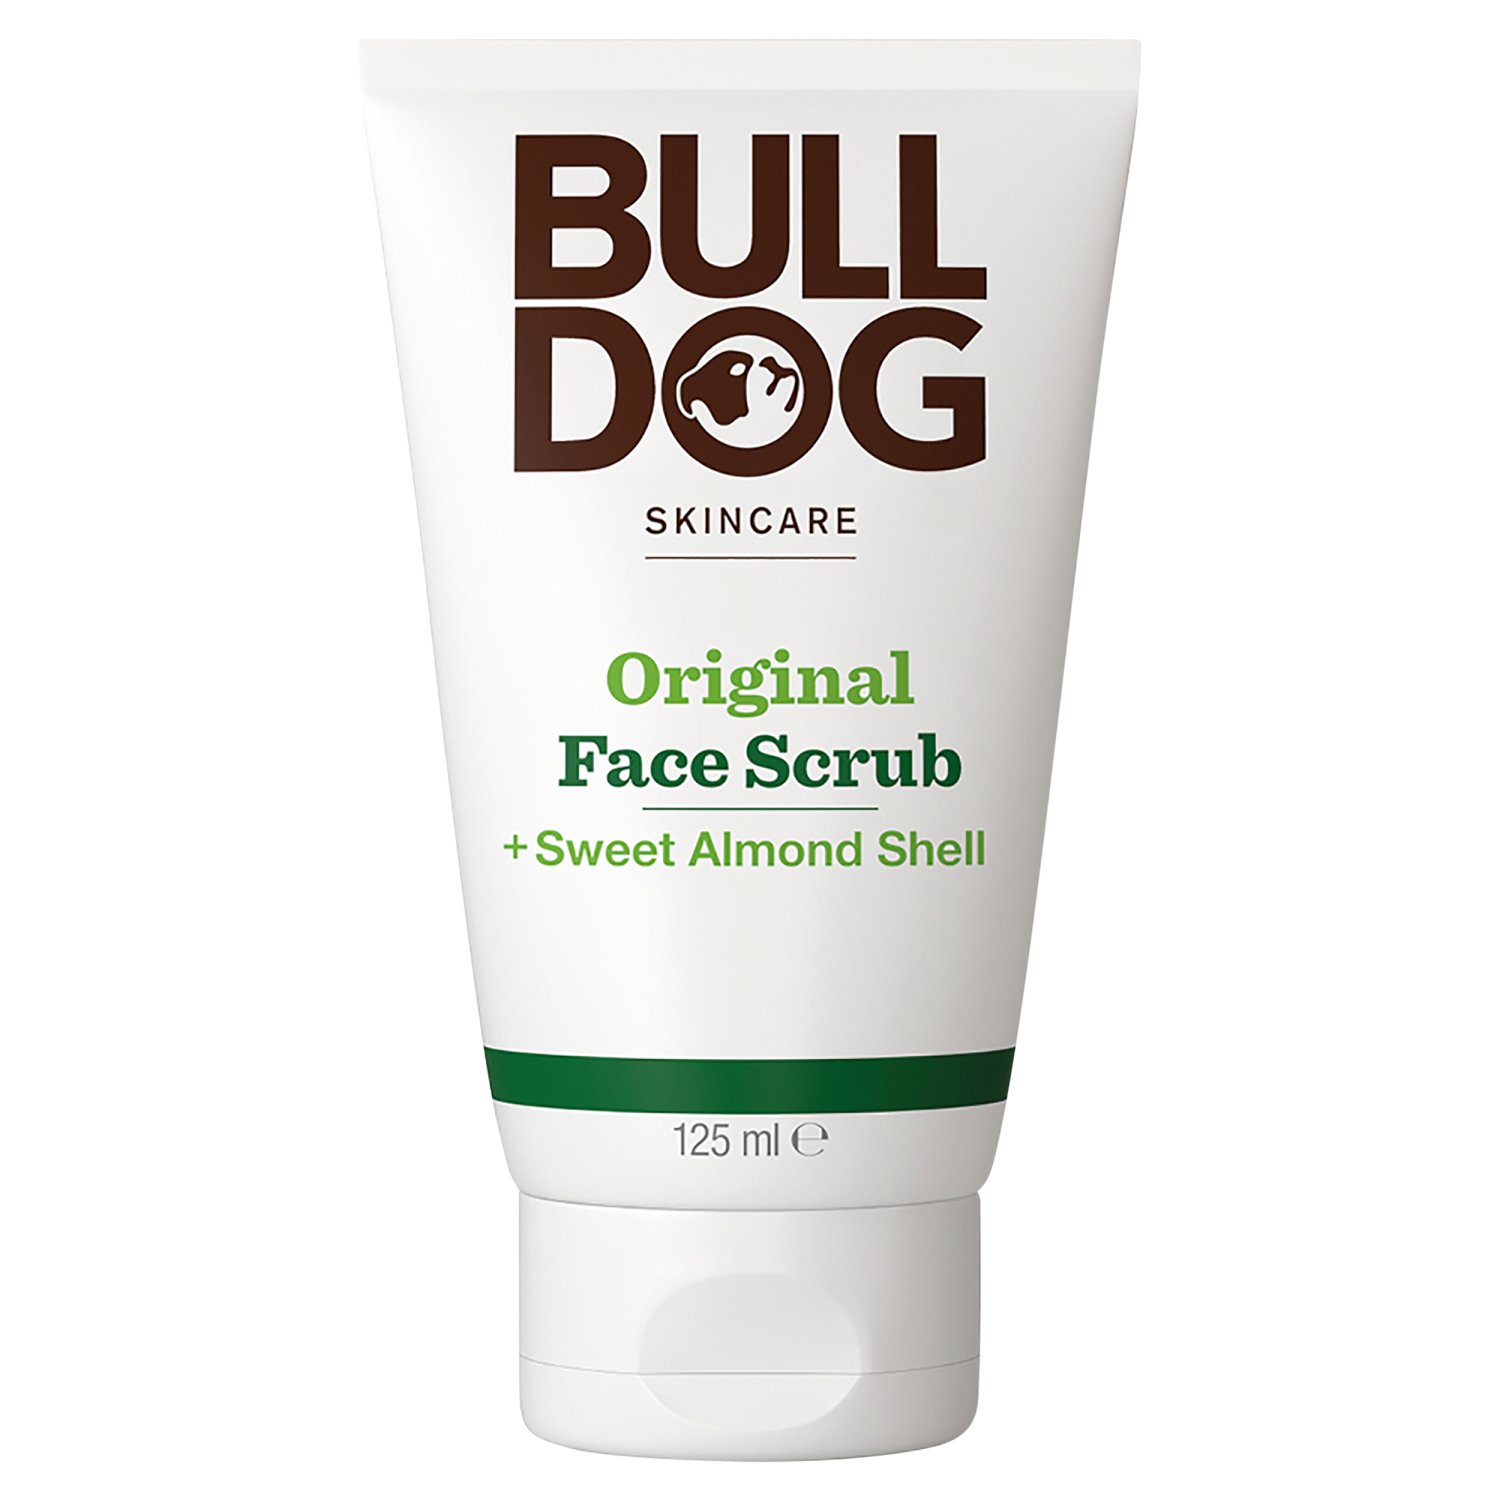 Bulldog Original Face Scrub (125 ml)